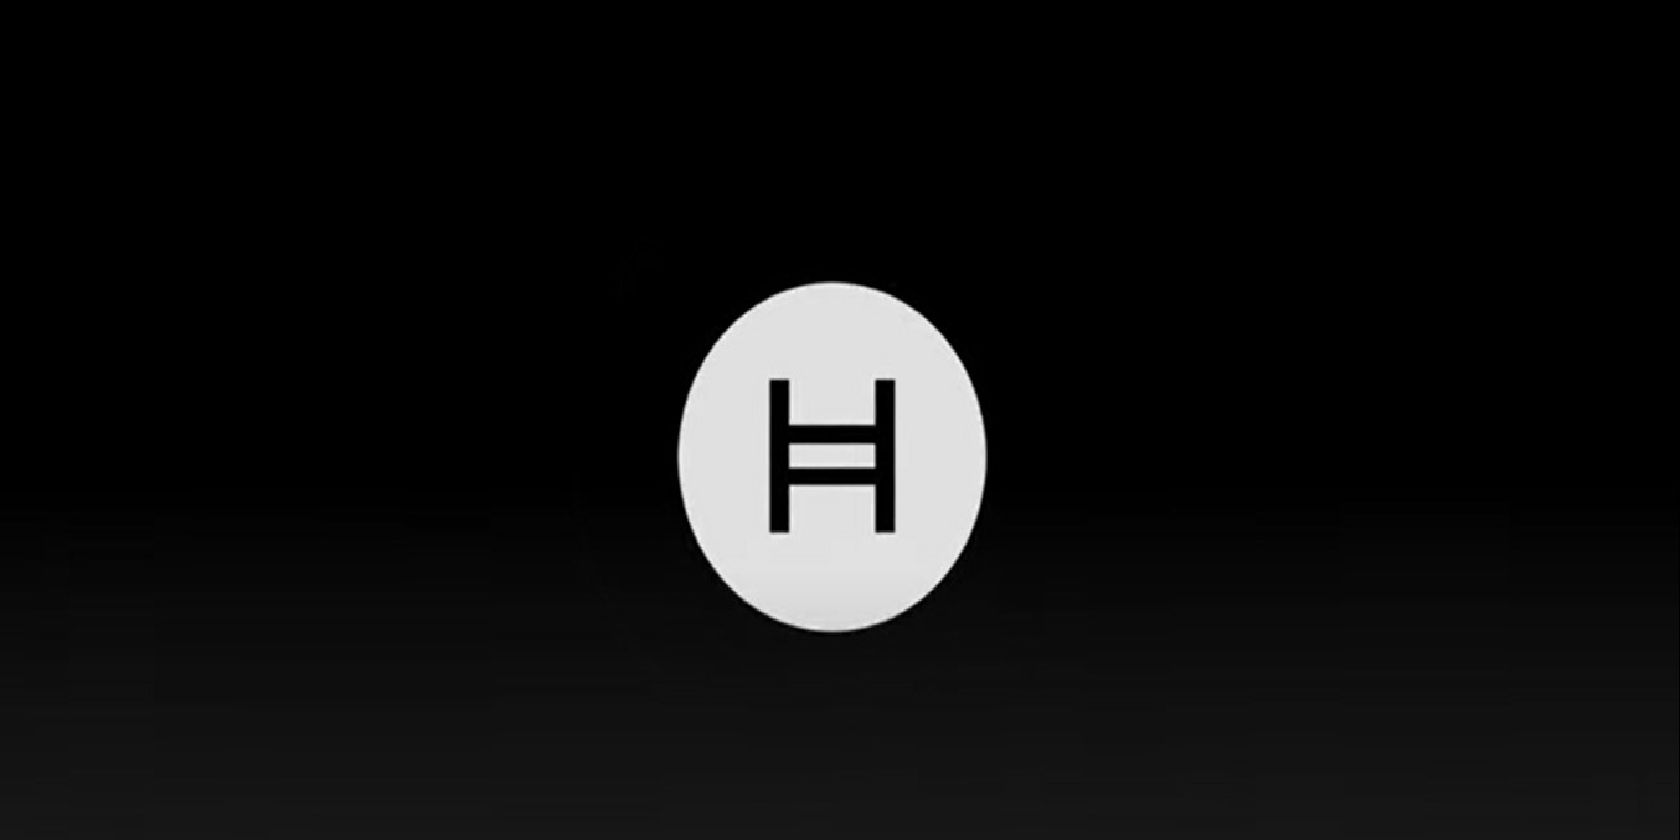 The Hedera logo